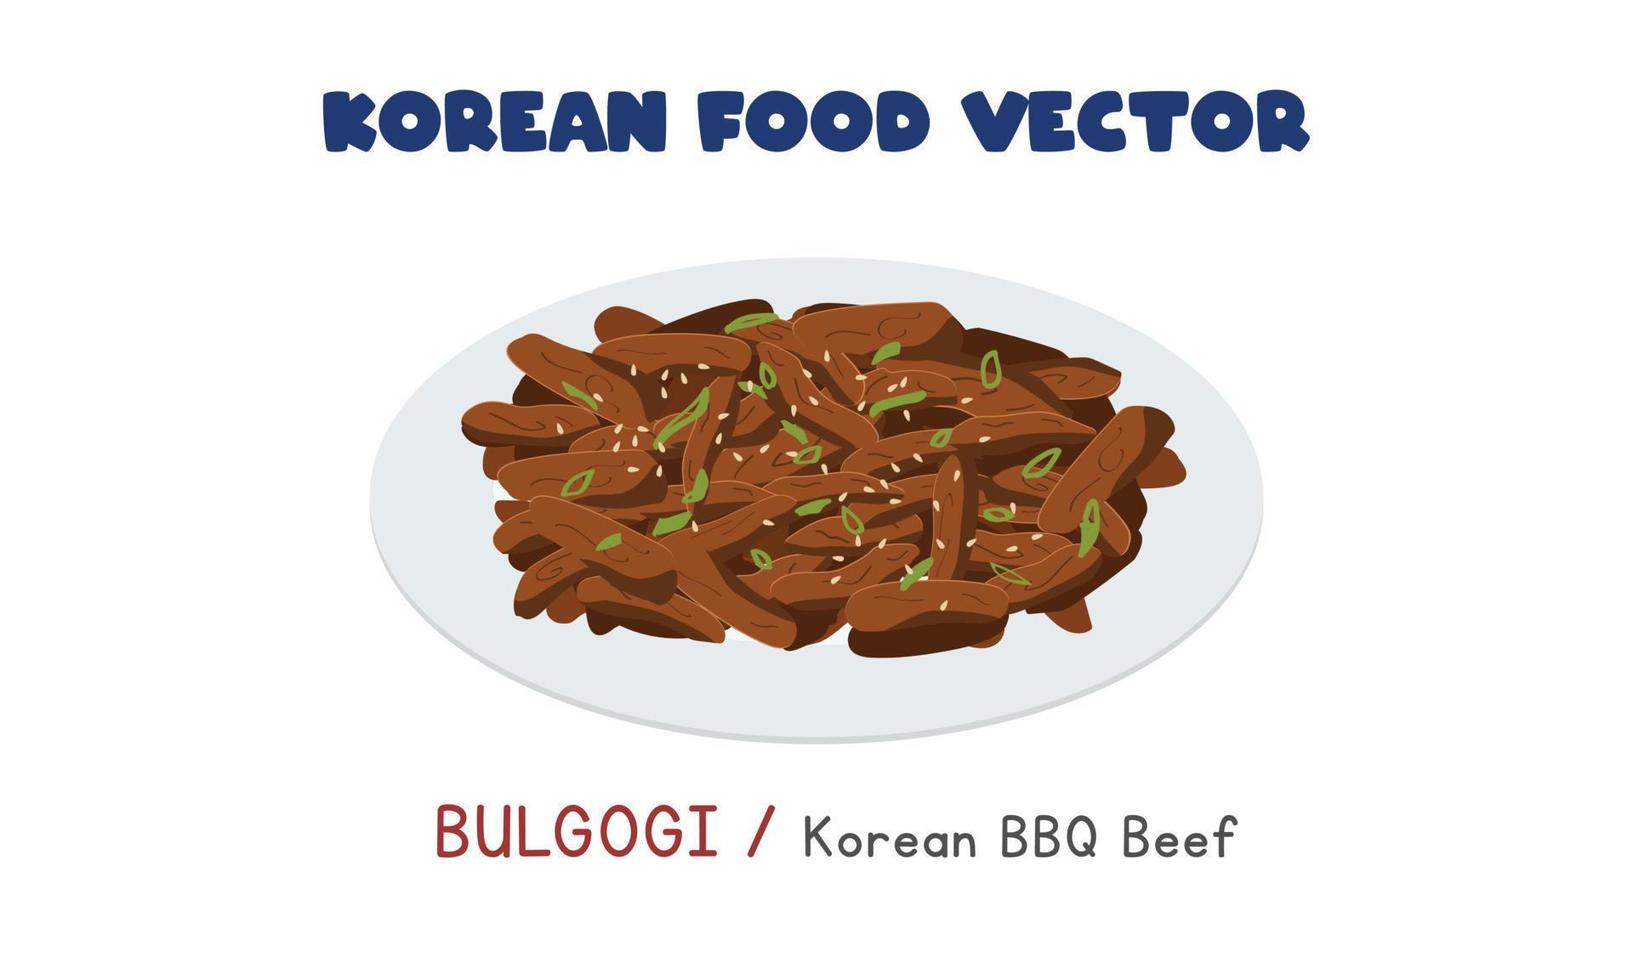 Korean Bulgogi - Korean BBQ Beef flat vector design illustration, clipart cartoon style. Asian food. Korean cuisine. Korean food